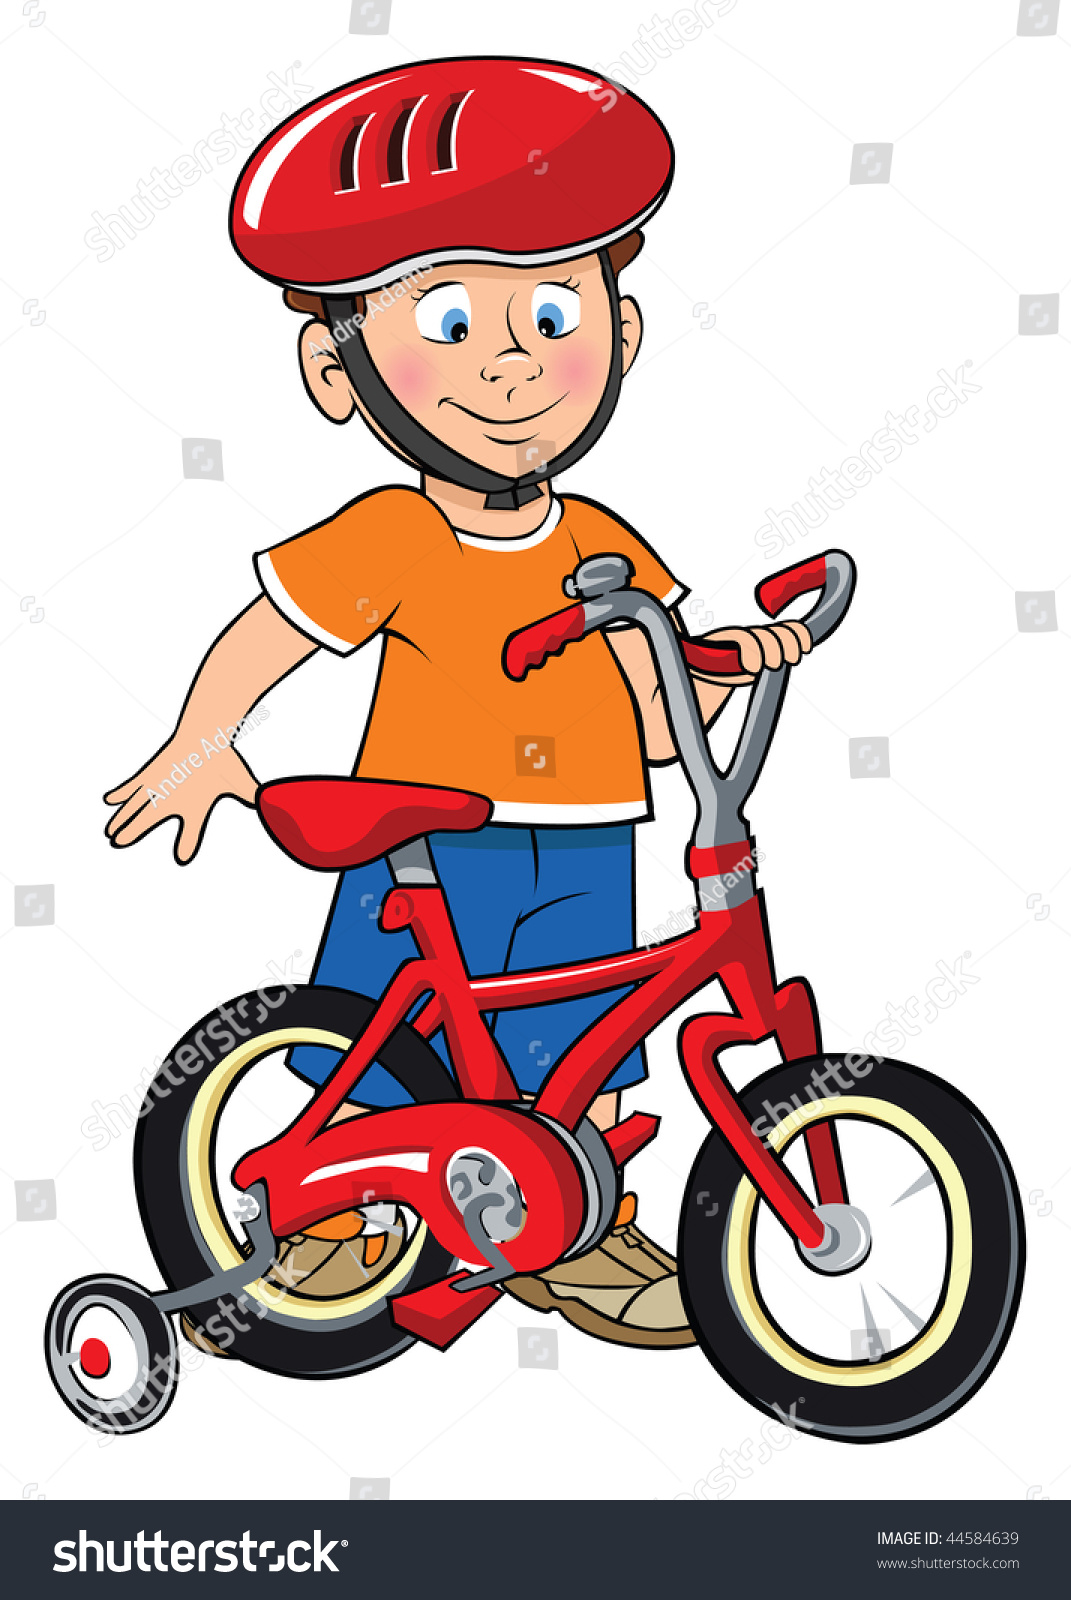 boy riding a bike clipart - photo #30